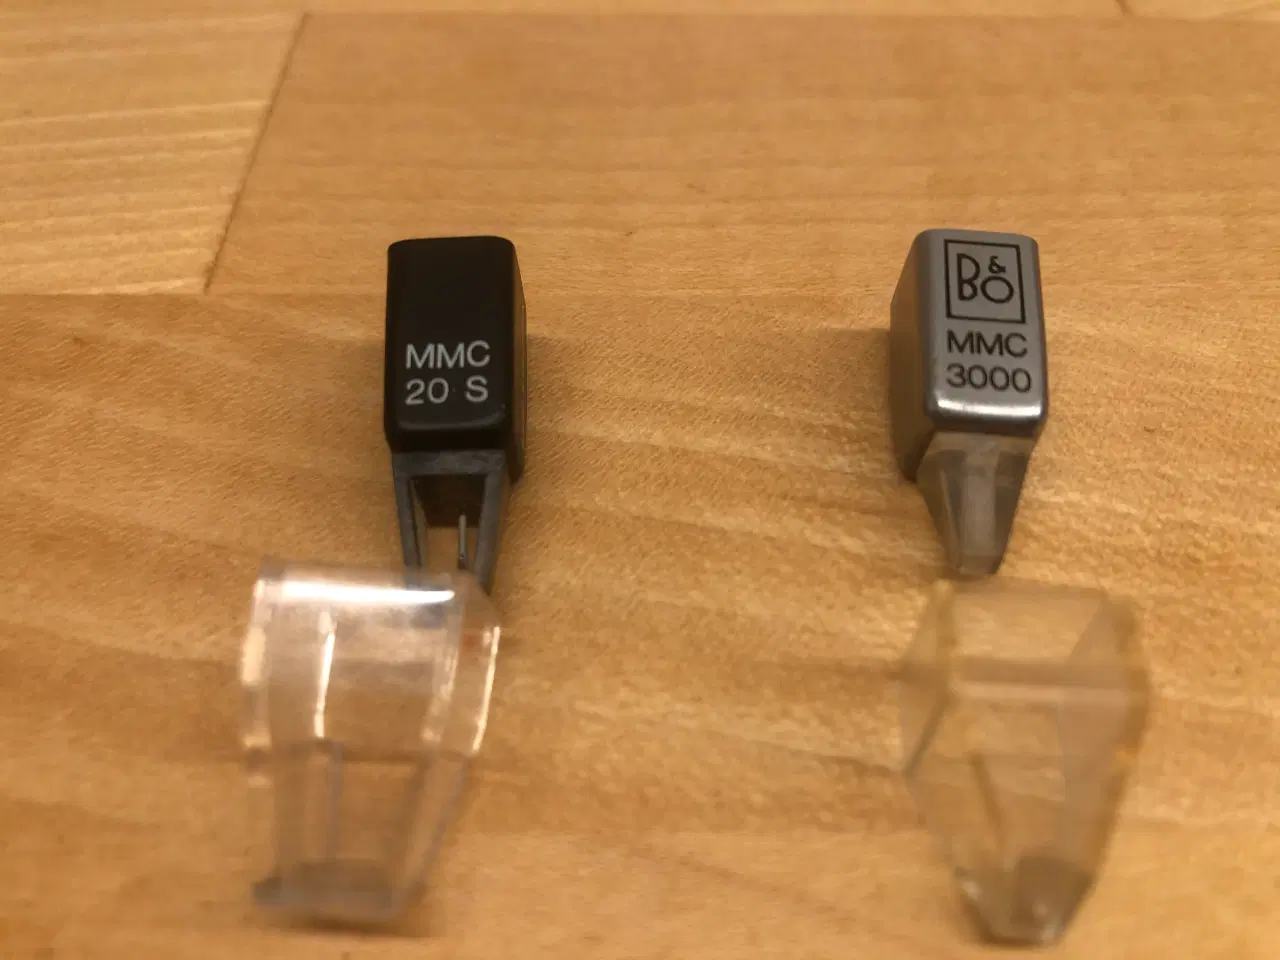 Billede 1 - Pickup MMC3000 og MMC20 s